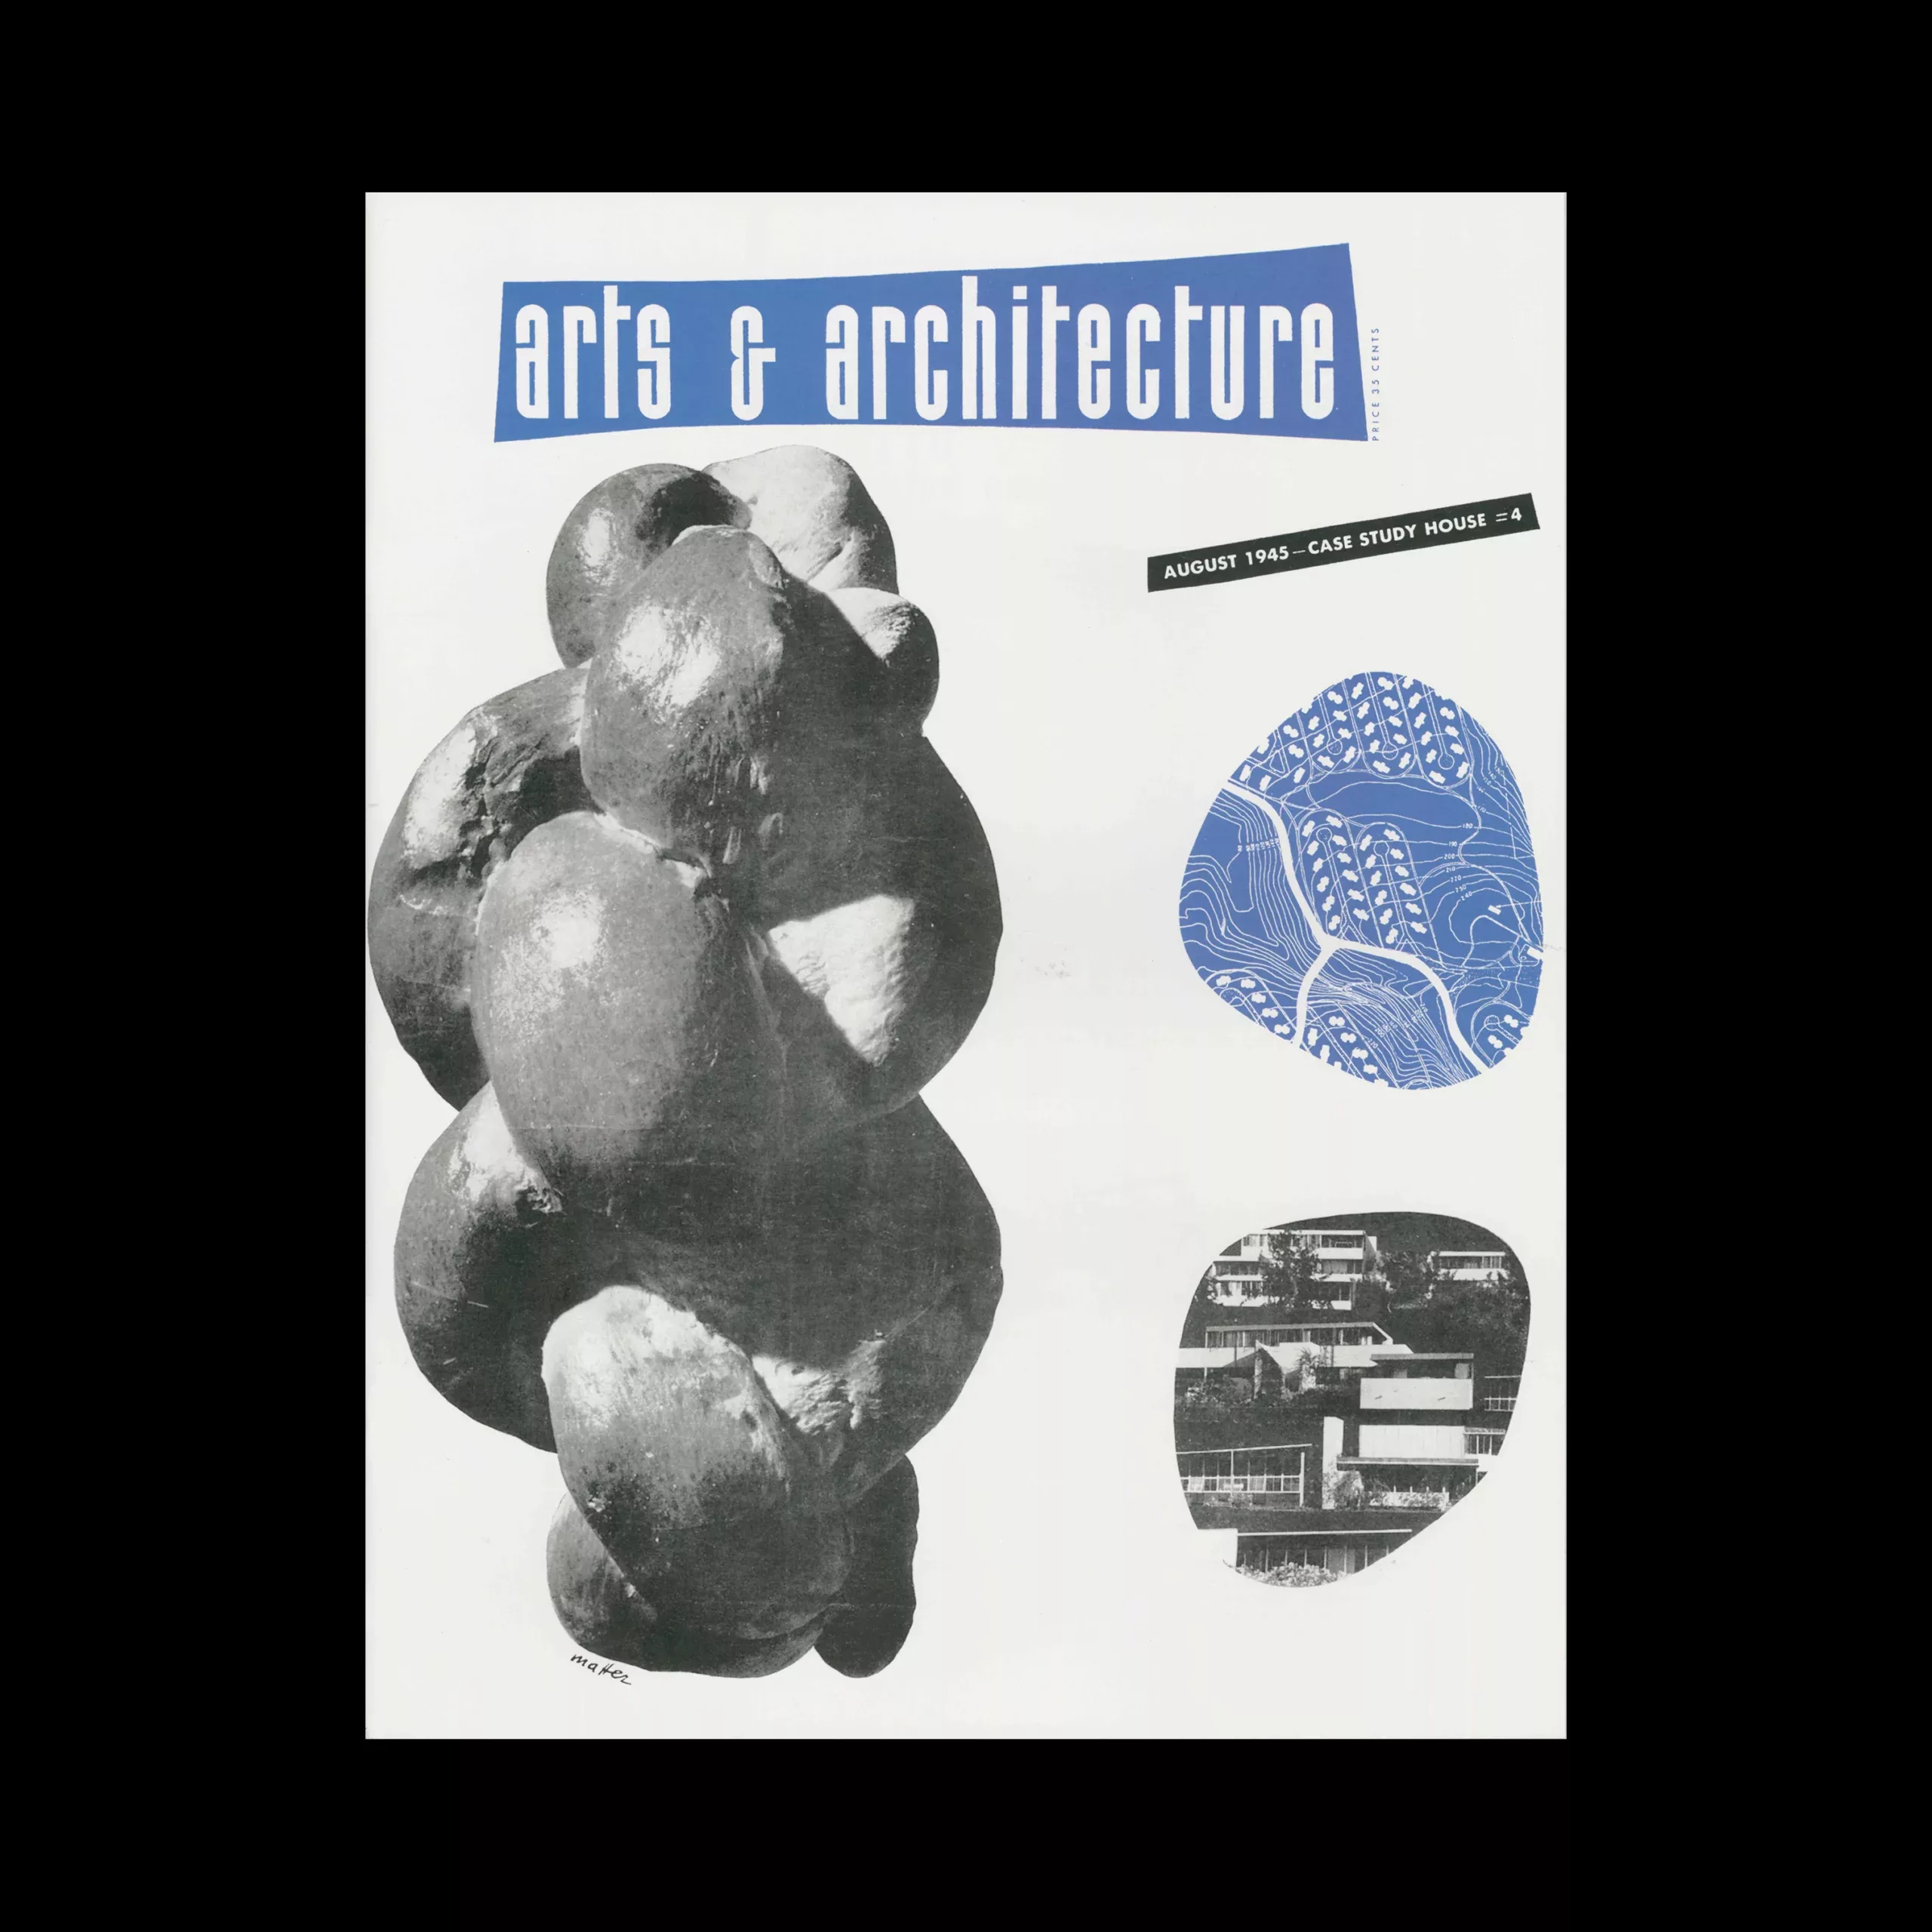 Arts & Architecture August 1945, Complete Reprint, Taschen, 2008. Cover design by Herbert Matter